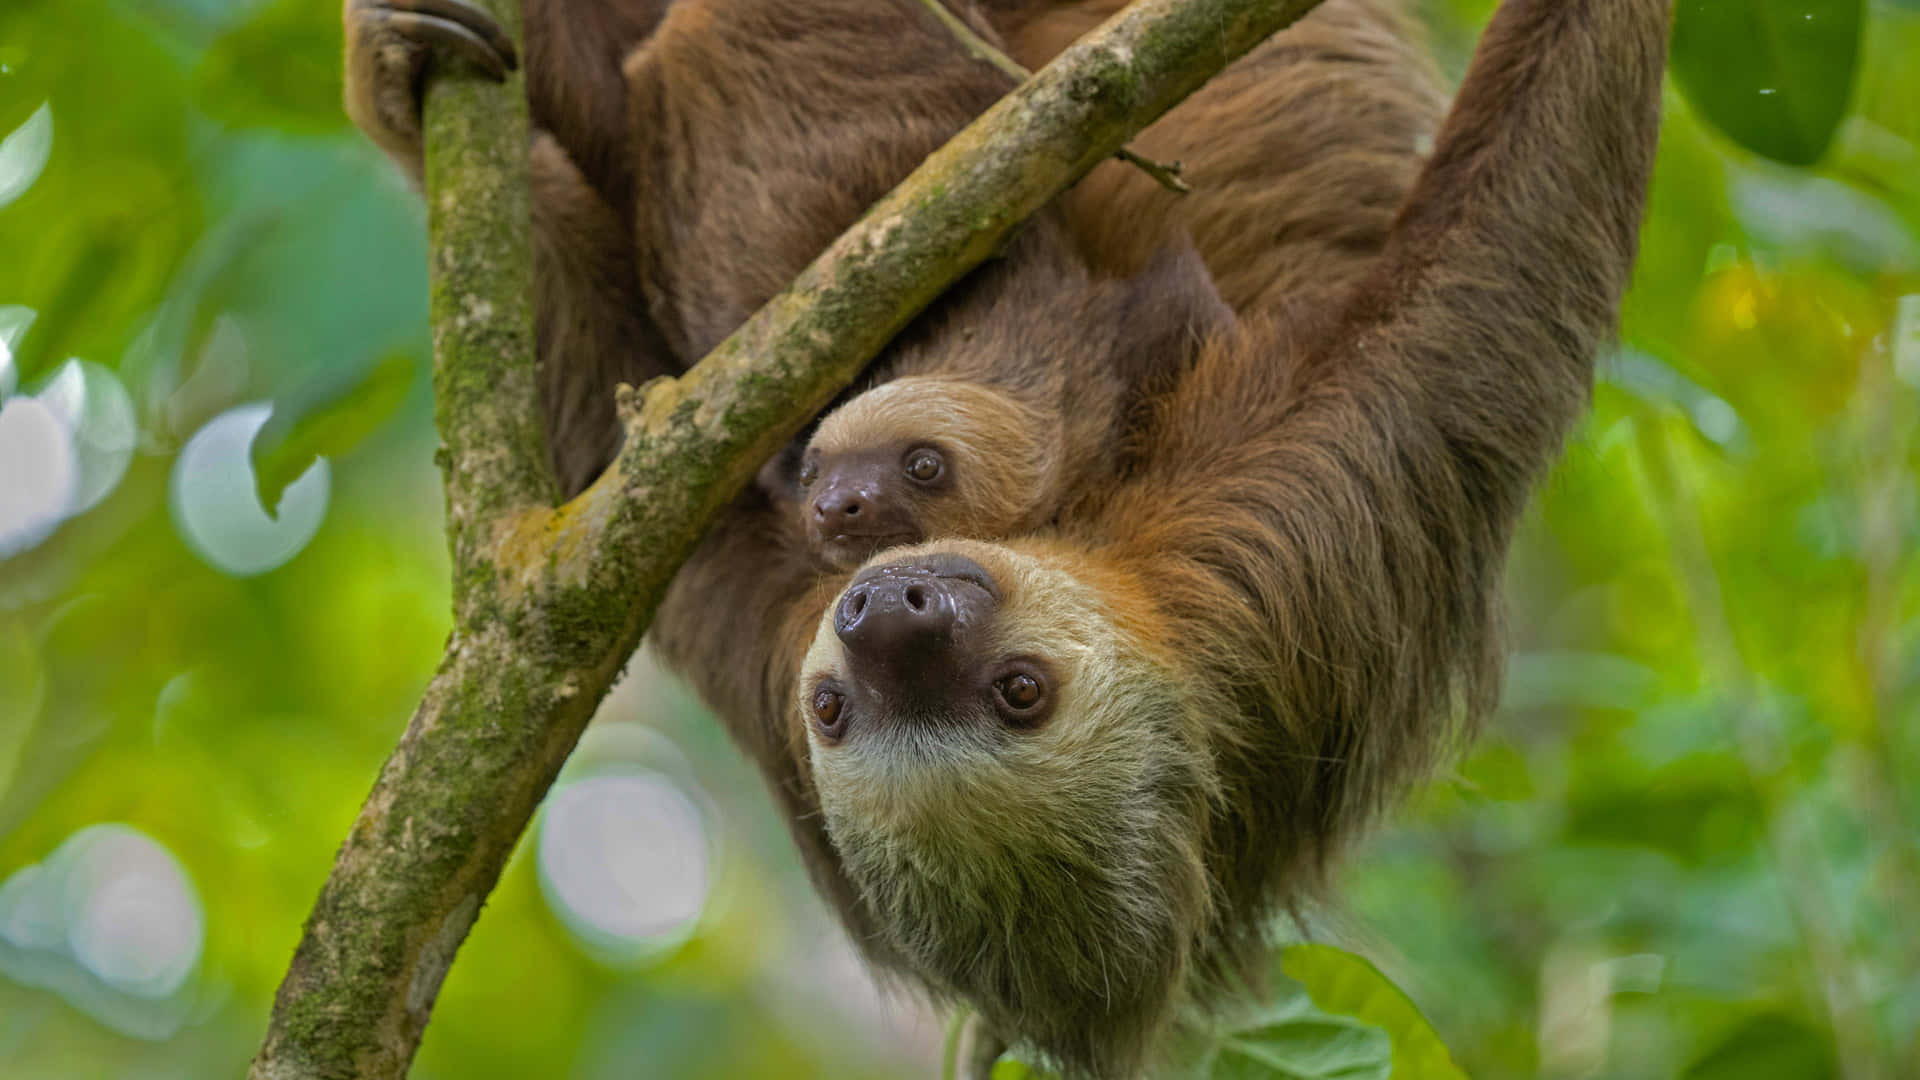 This sloth takes it easy